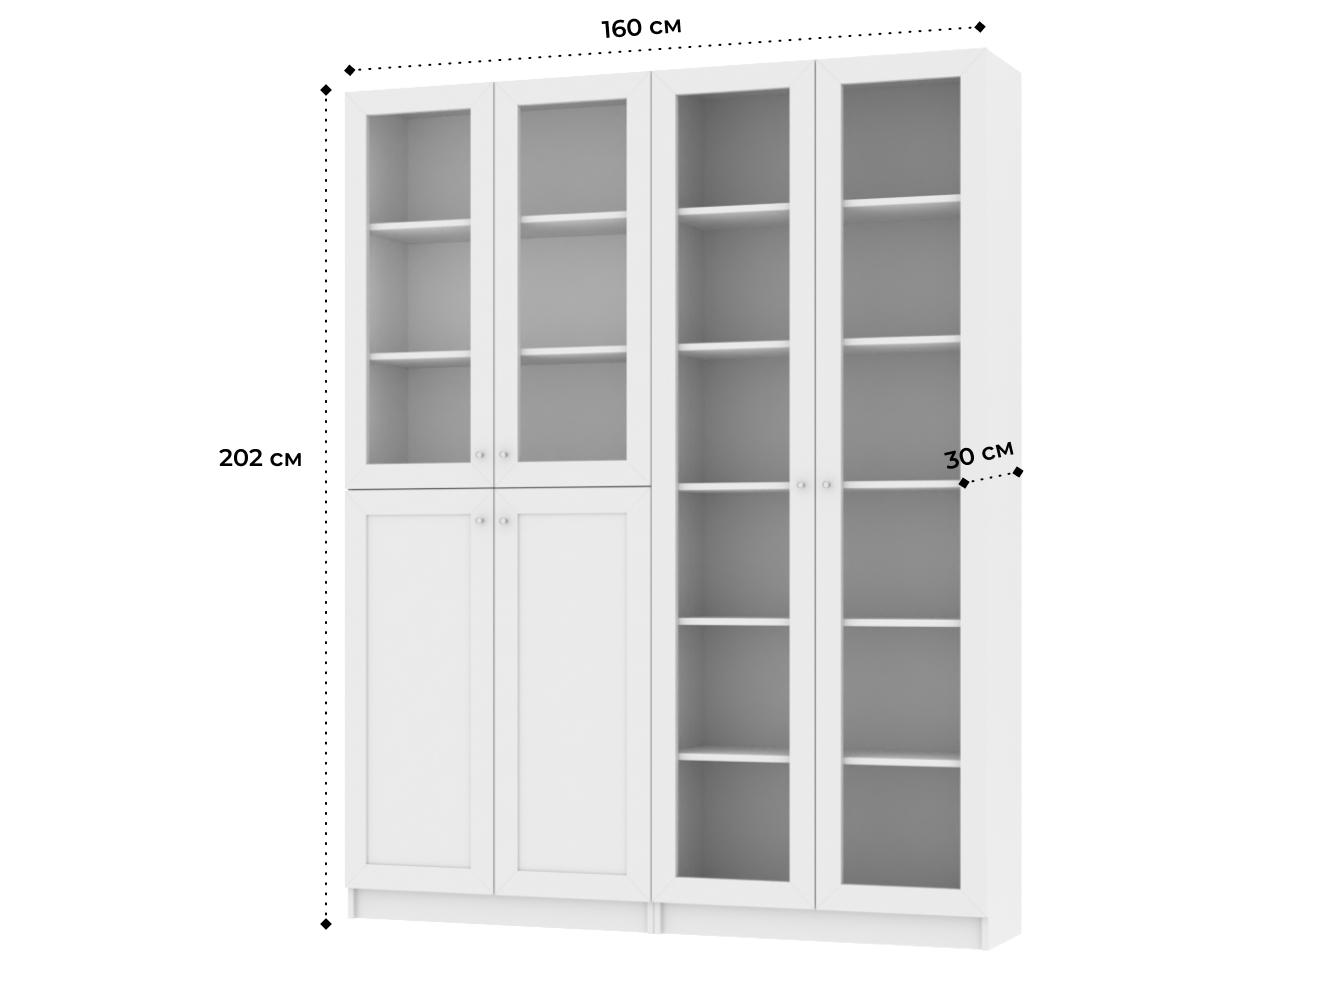  Книжный шкаф Билли 345 white ИКЕА (IKEA) изображение товара